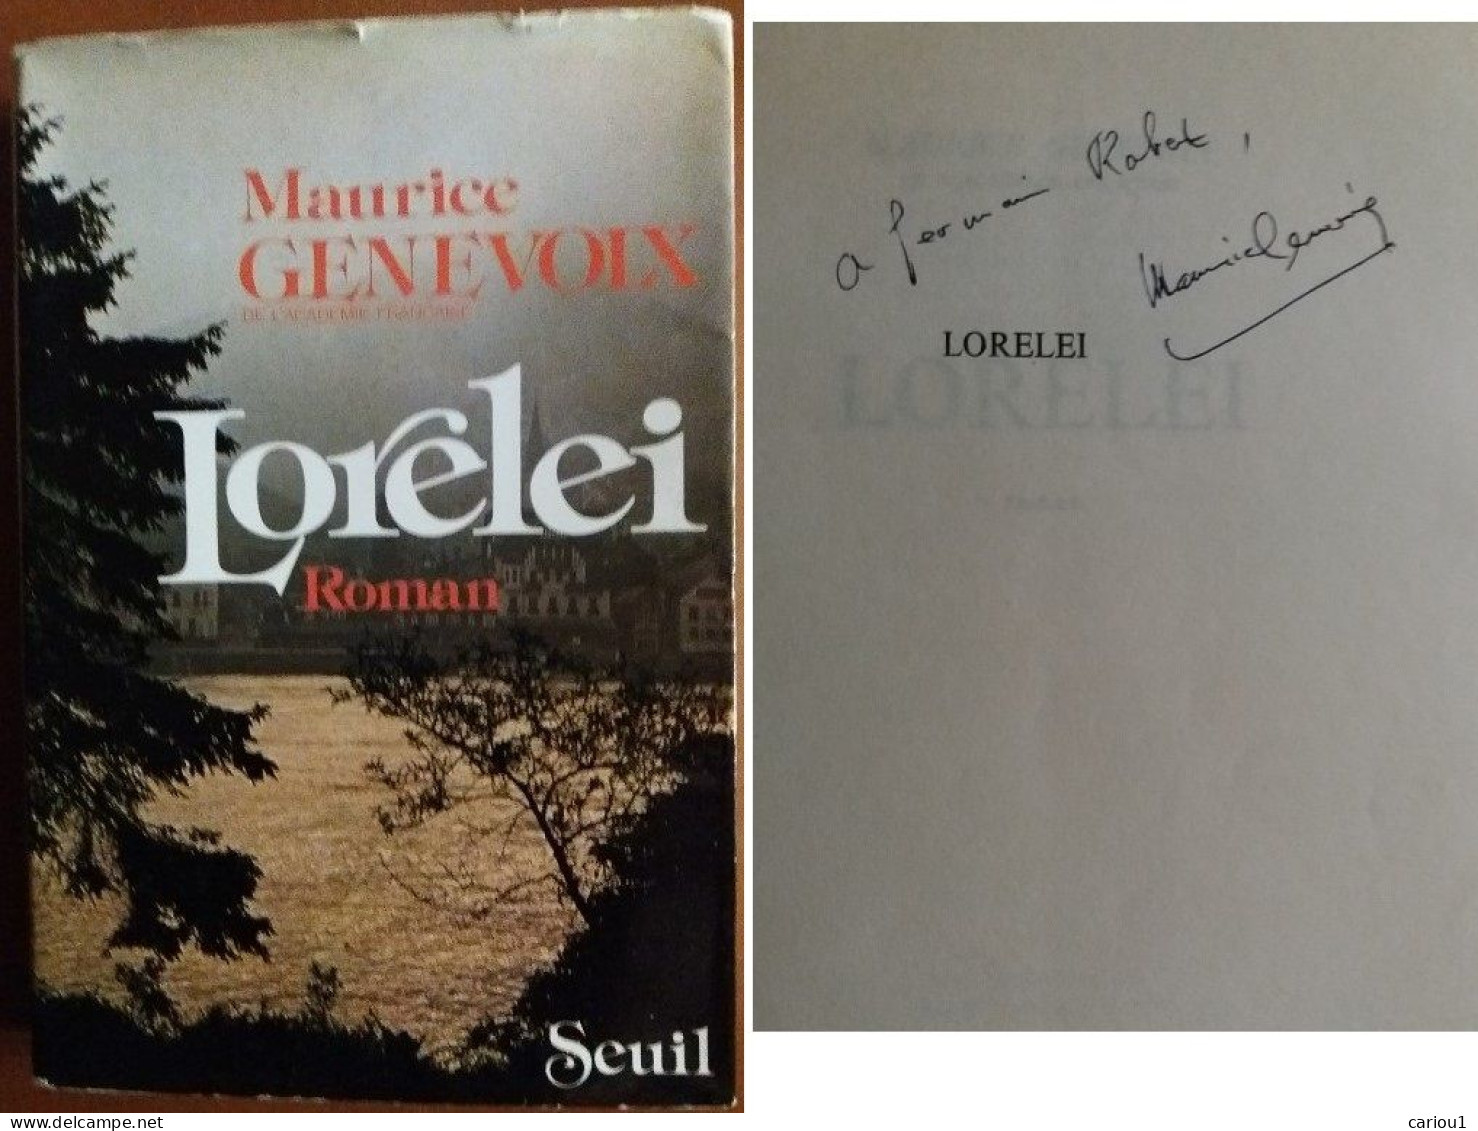 C1 Maurice GENEVOIX LORELEI 1978 Envoi DEDICACE SIGNED Allemagne OFFENBACH MAIN PORT INCLUS France - Autographed